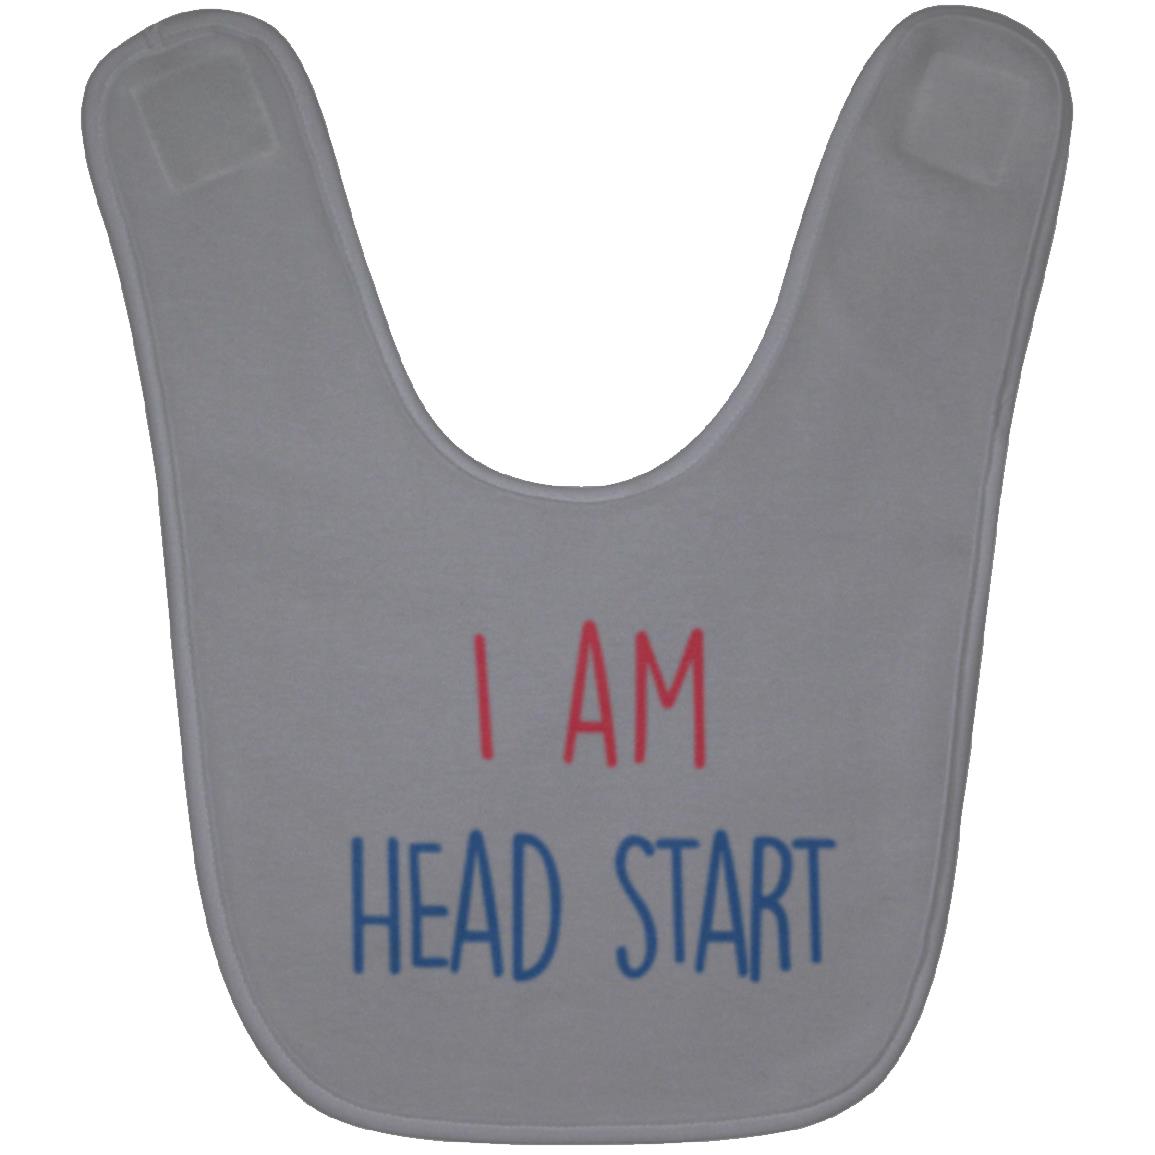 I am Head Start Baby Bib